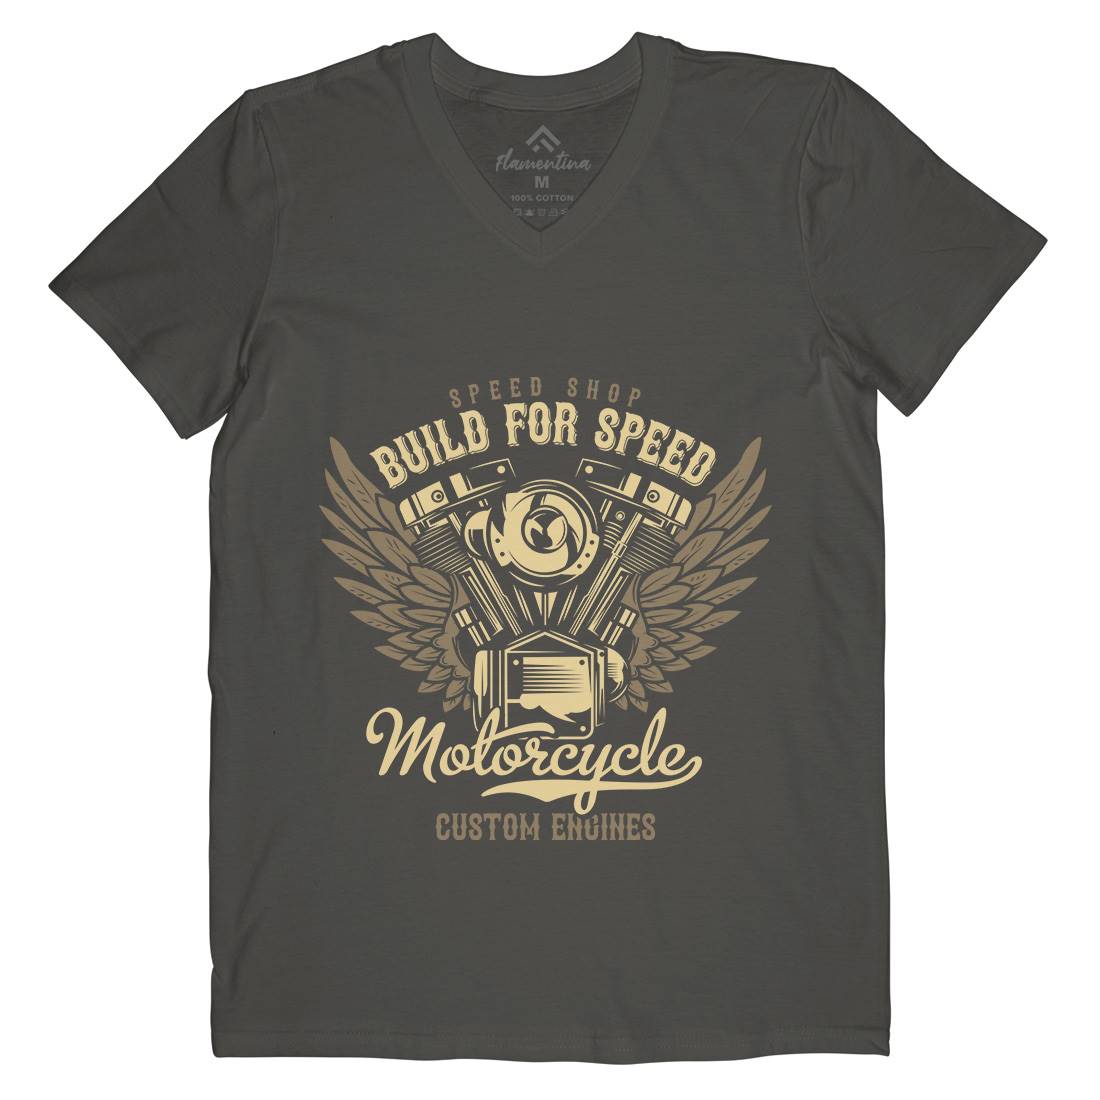 Build For Speed Mens V-Neck T-Shirt Motorcycles B842